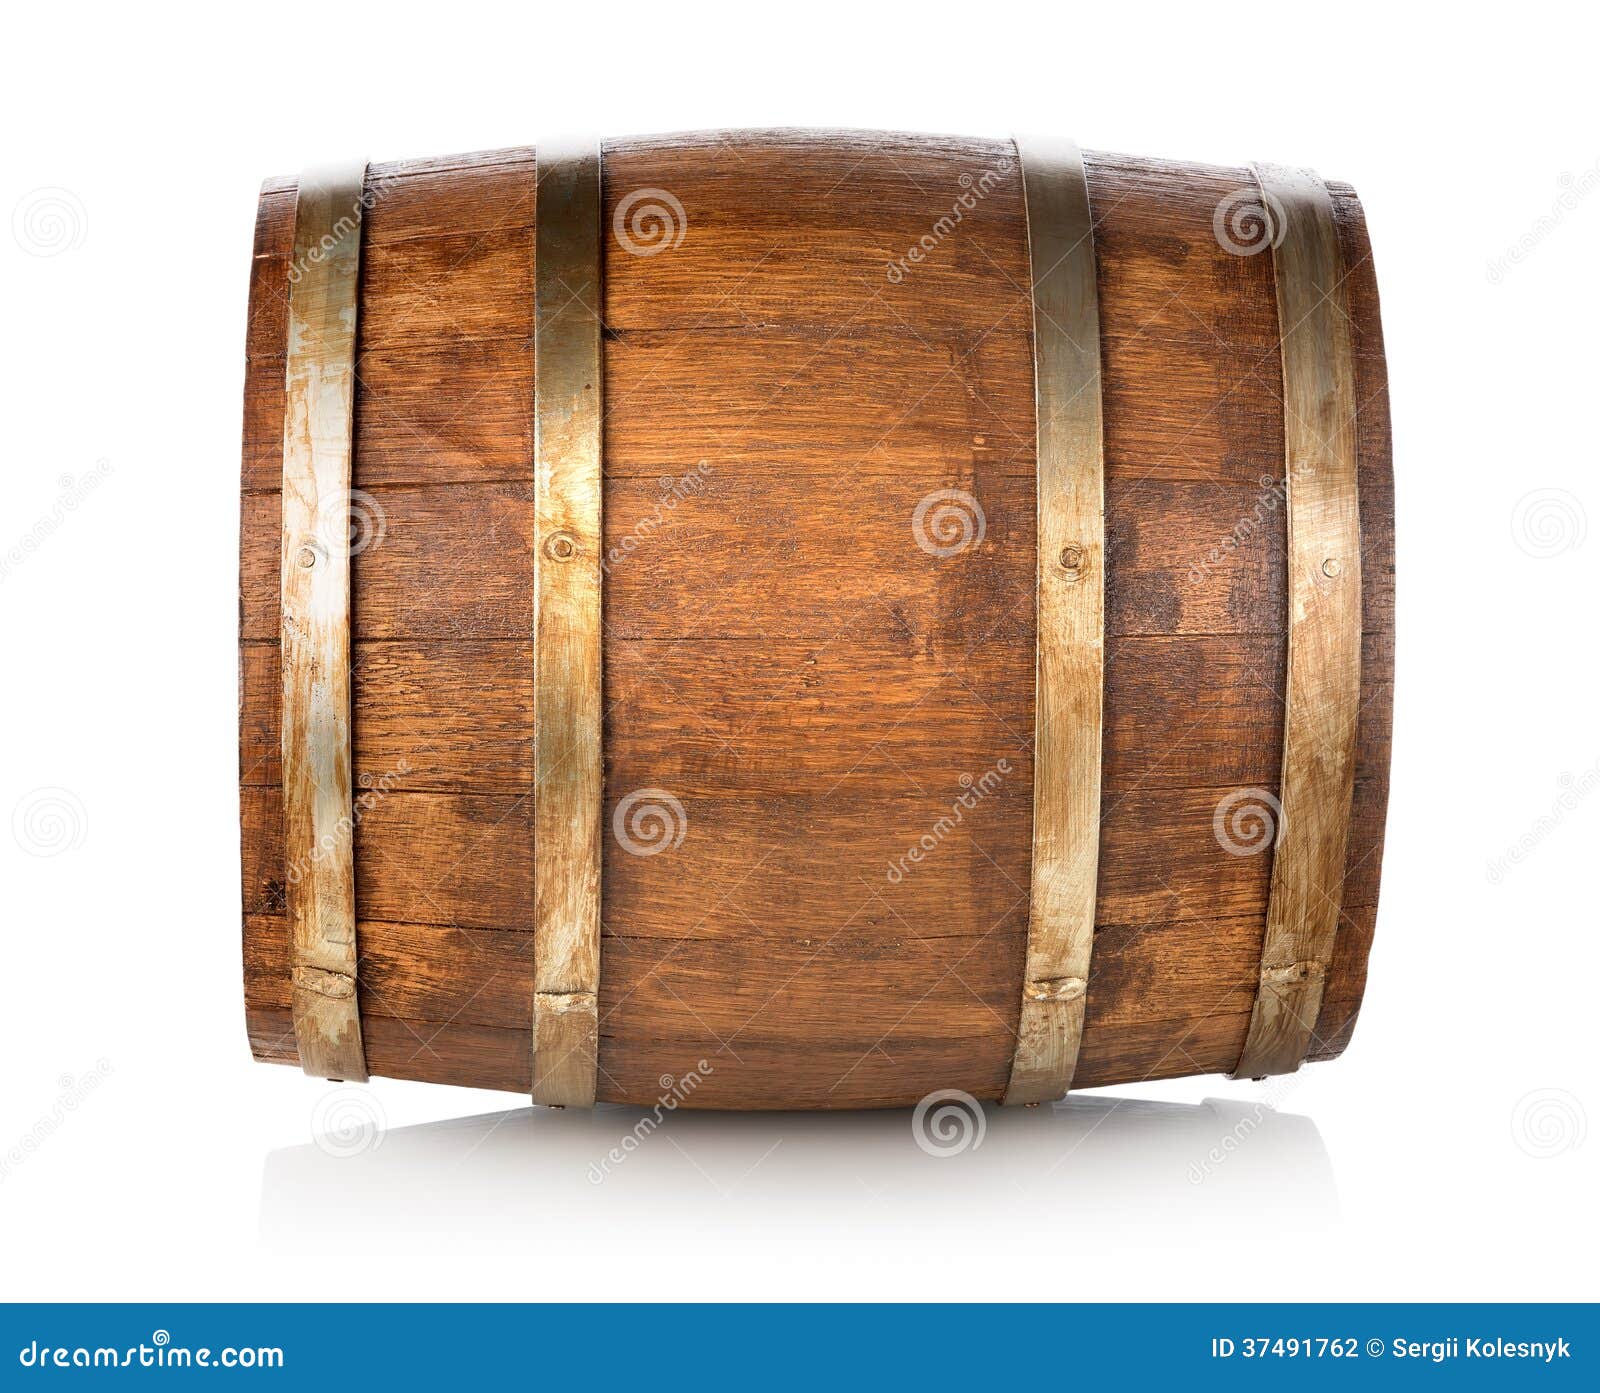 barrel made of wood